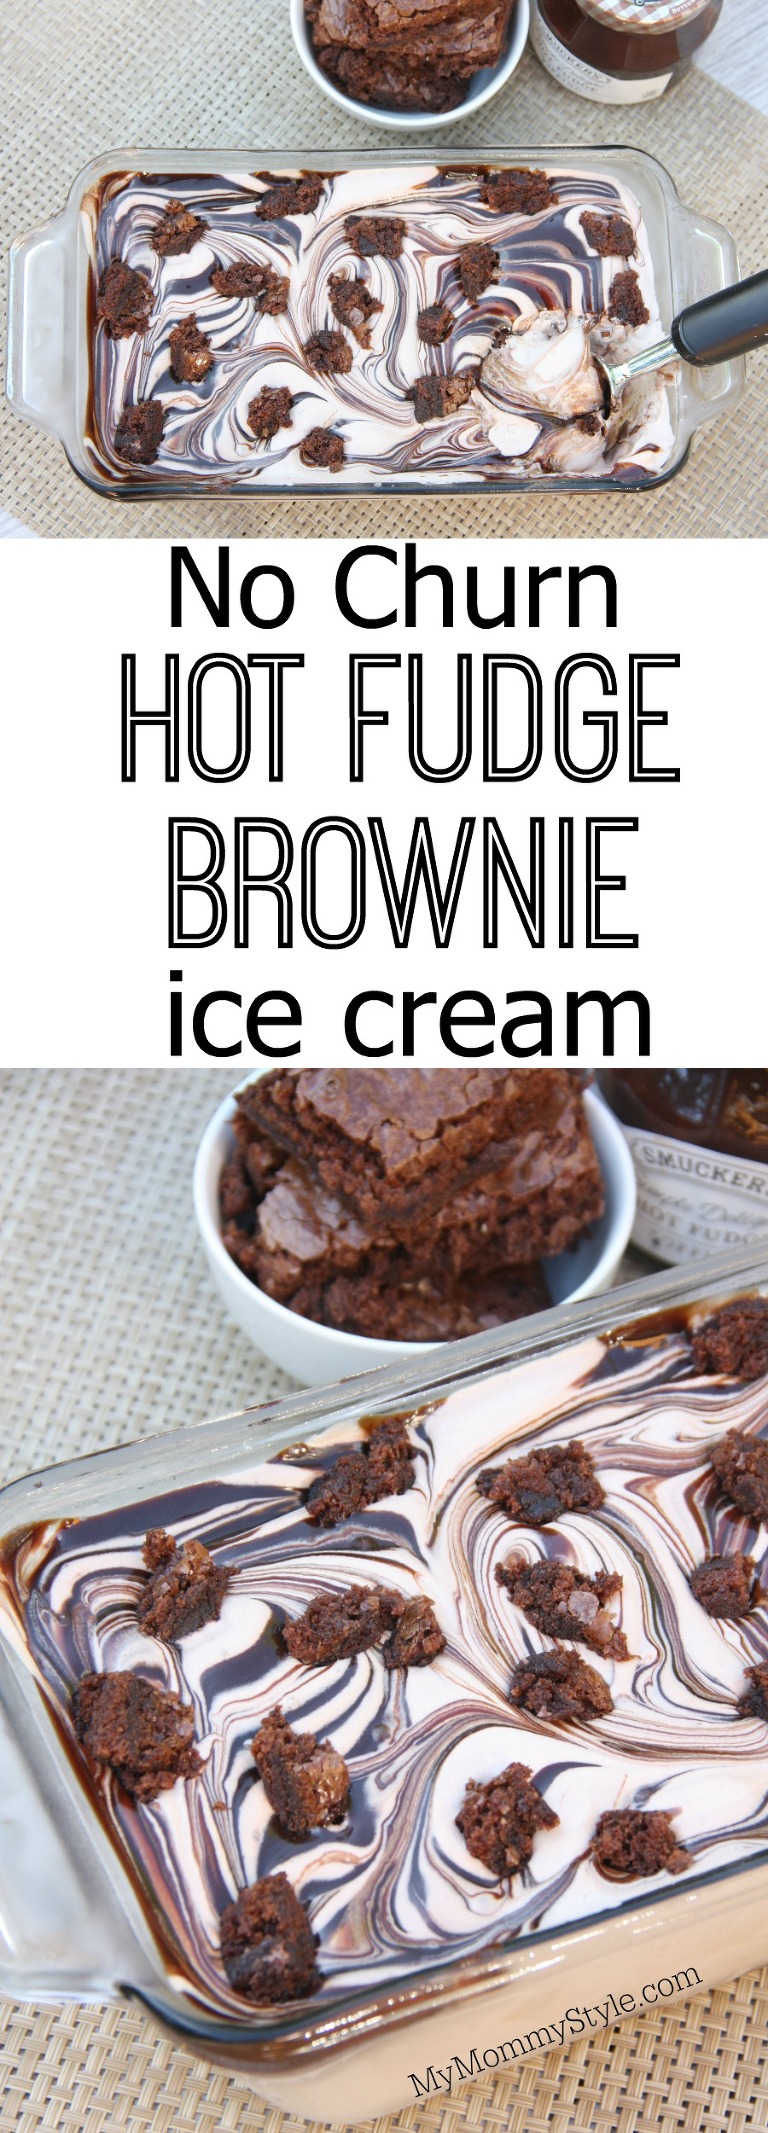 no churn hot fudge brownie ice cream